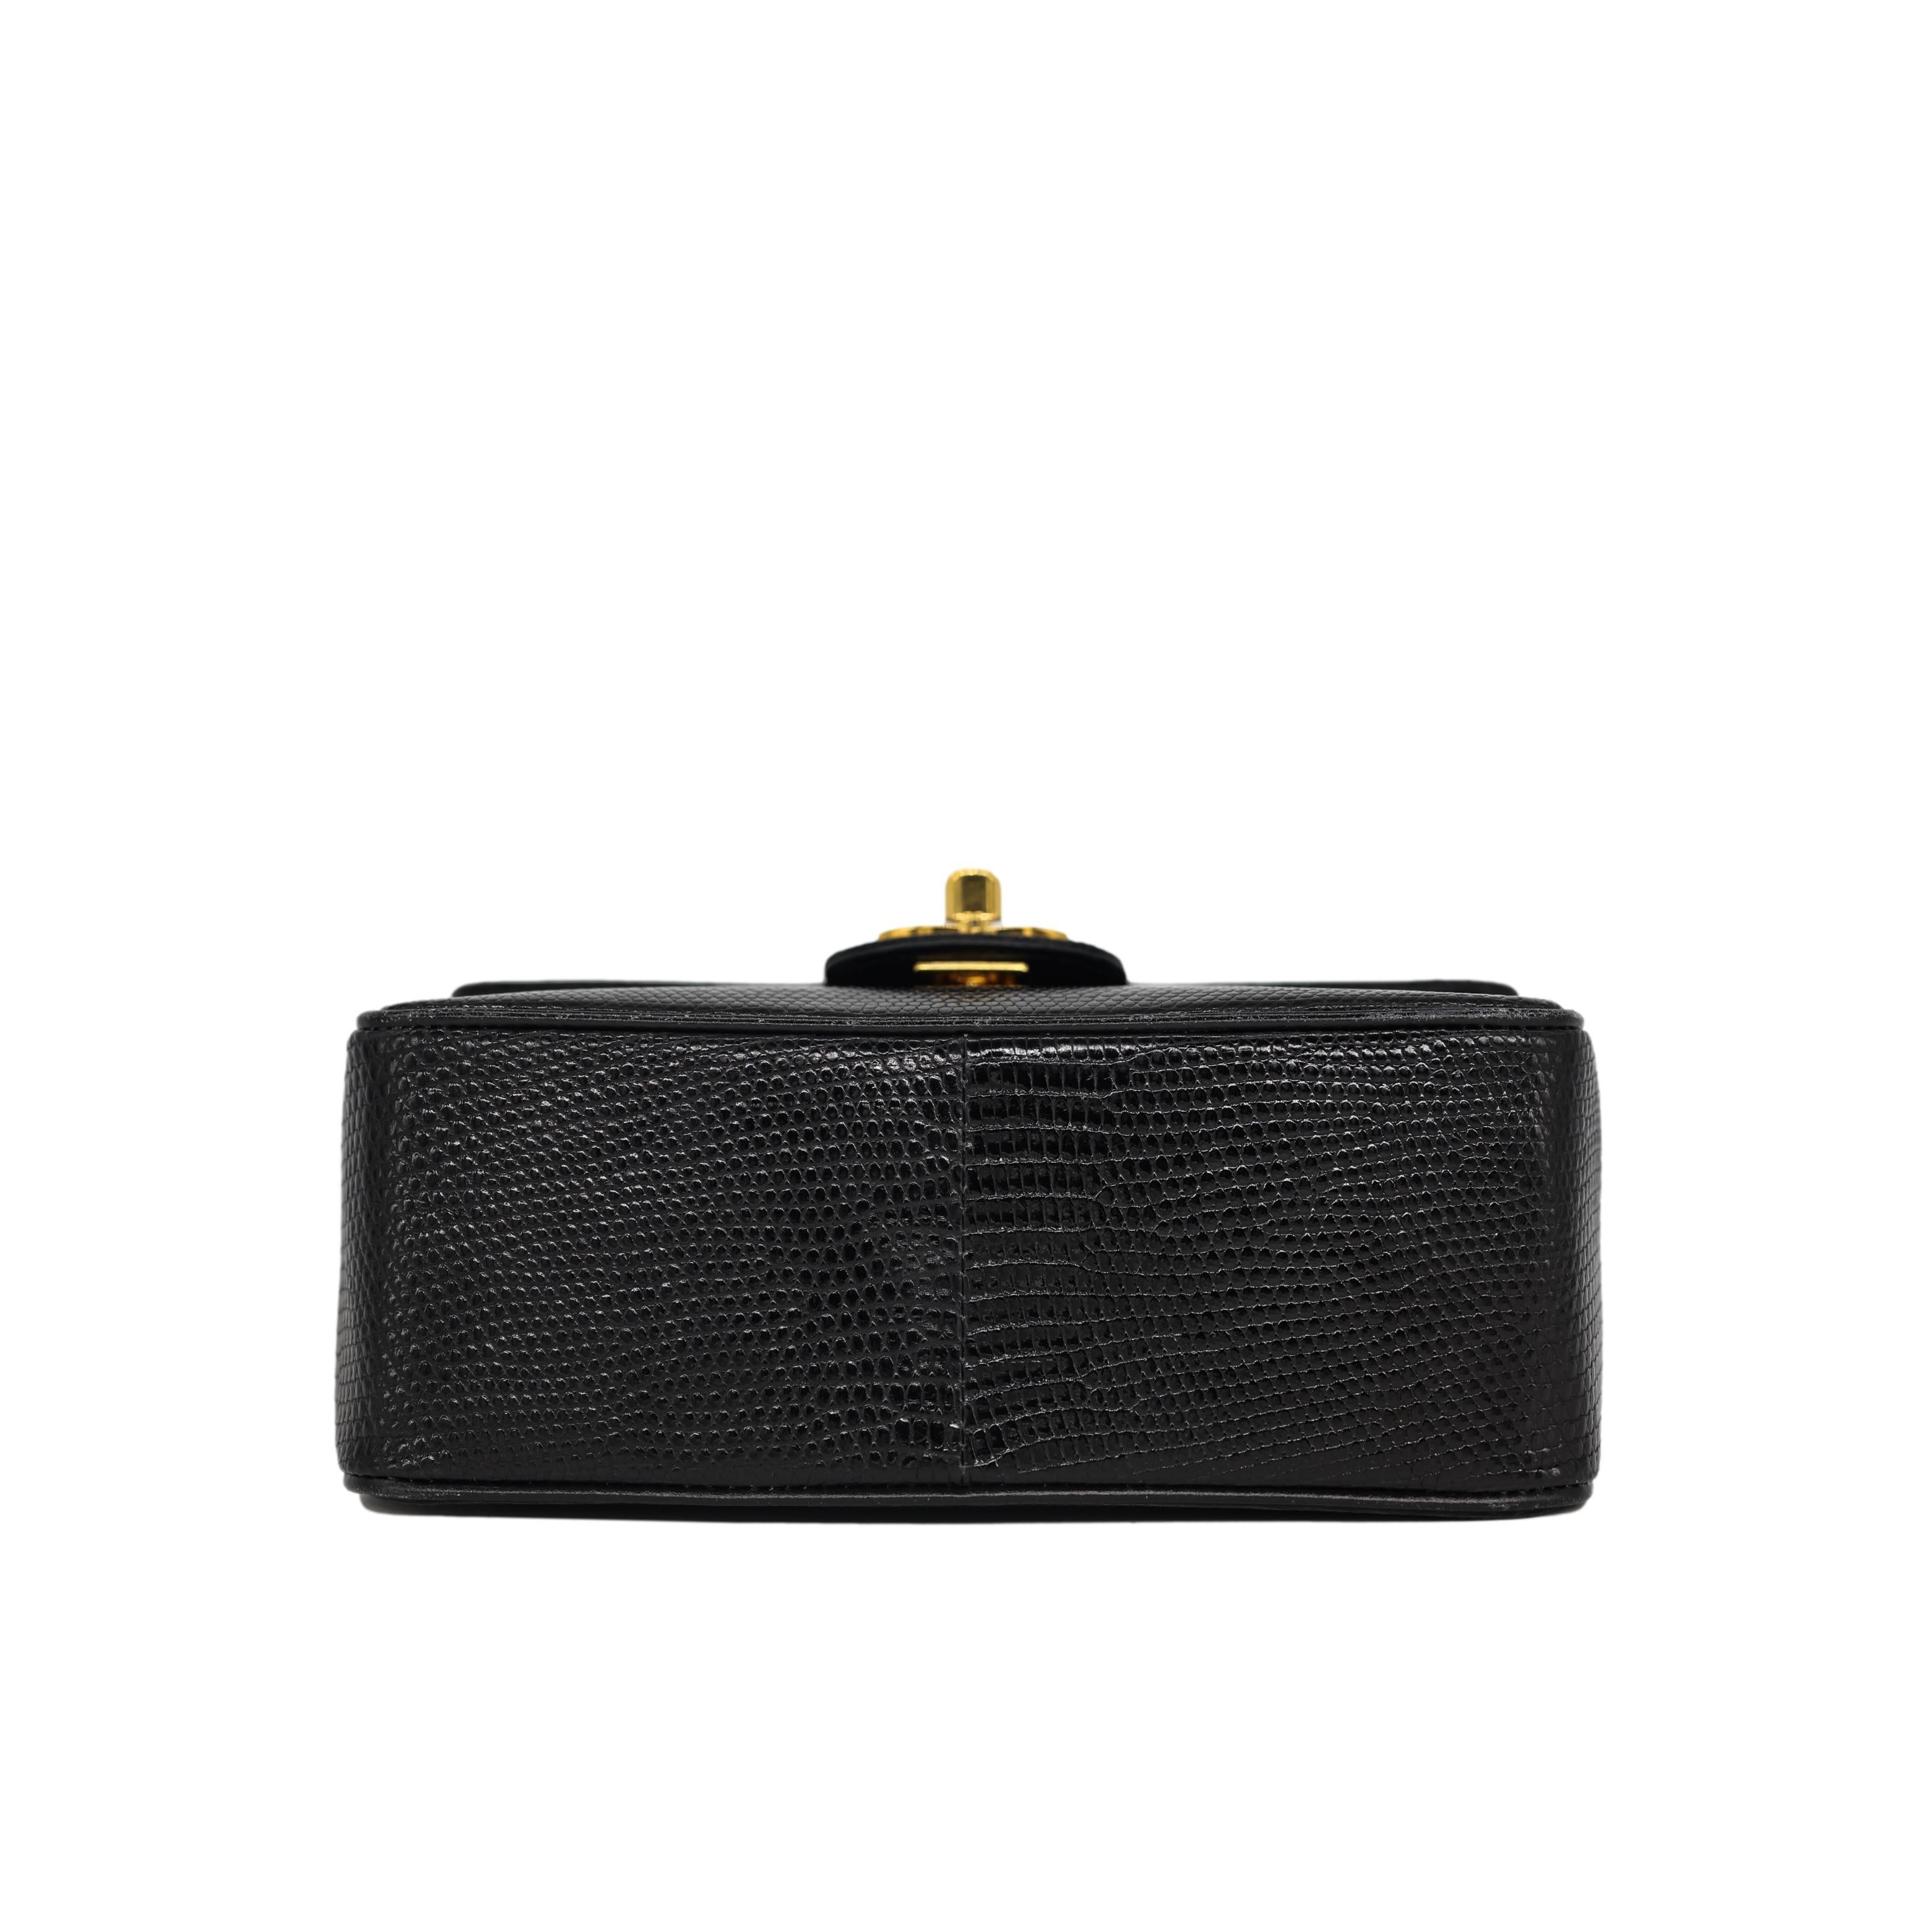 Chanel Vintage Mini Black Lizard Envelope Cross Body Flap Bag with Gold Hardware 4